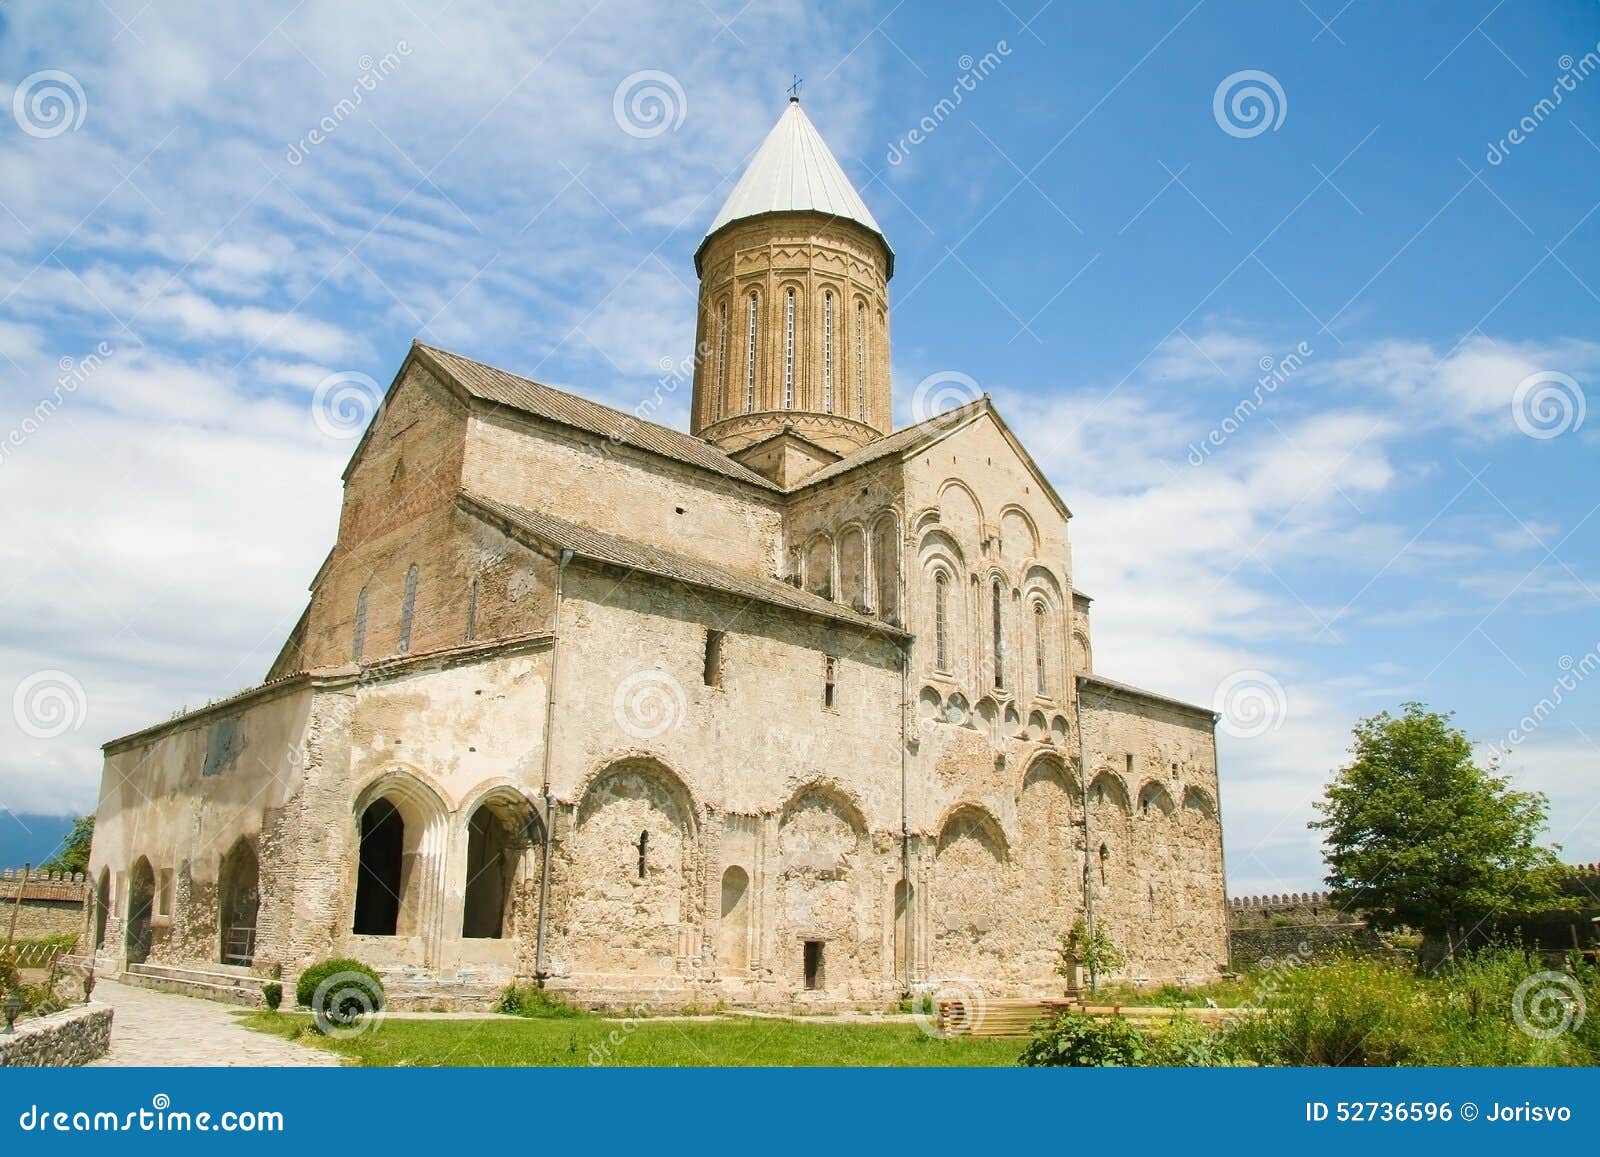 alaverdi monastery in kakheti region in eastern georgia